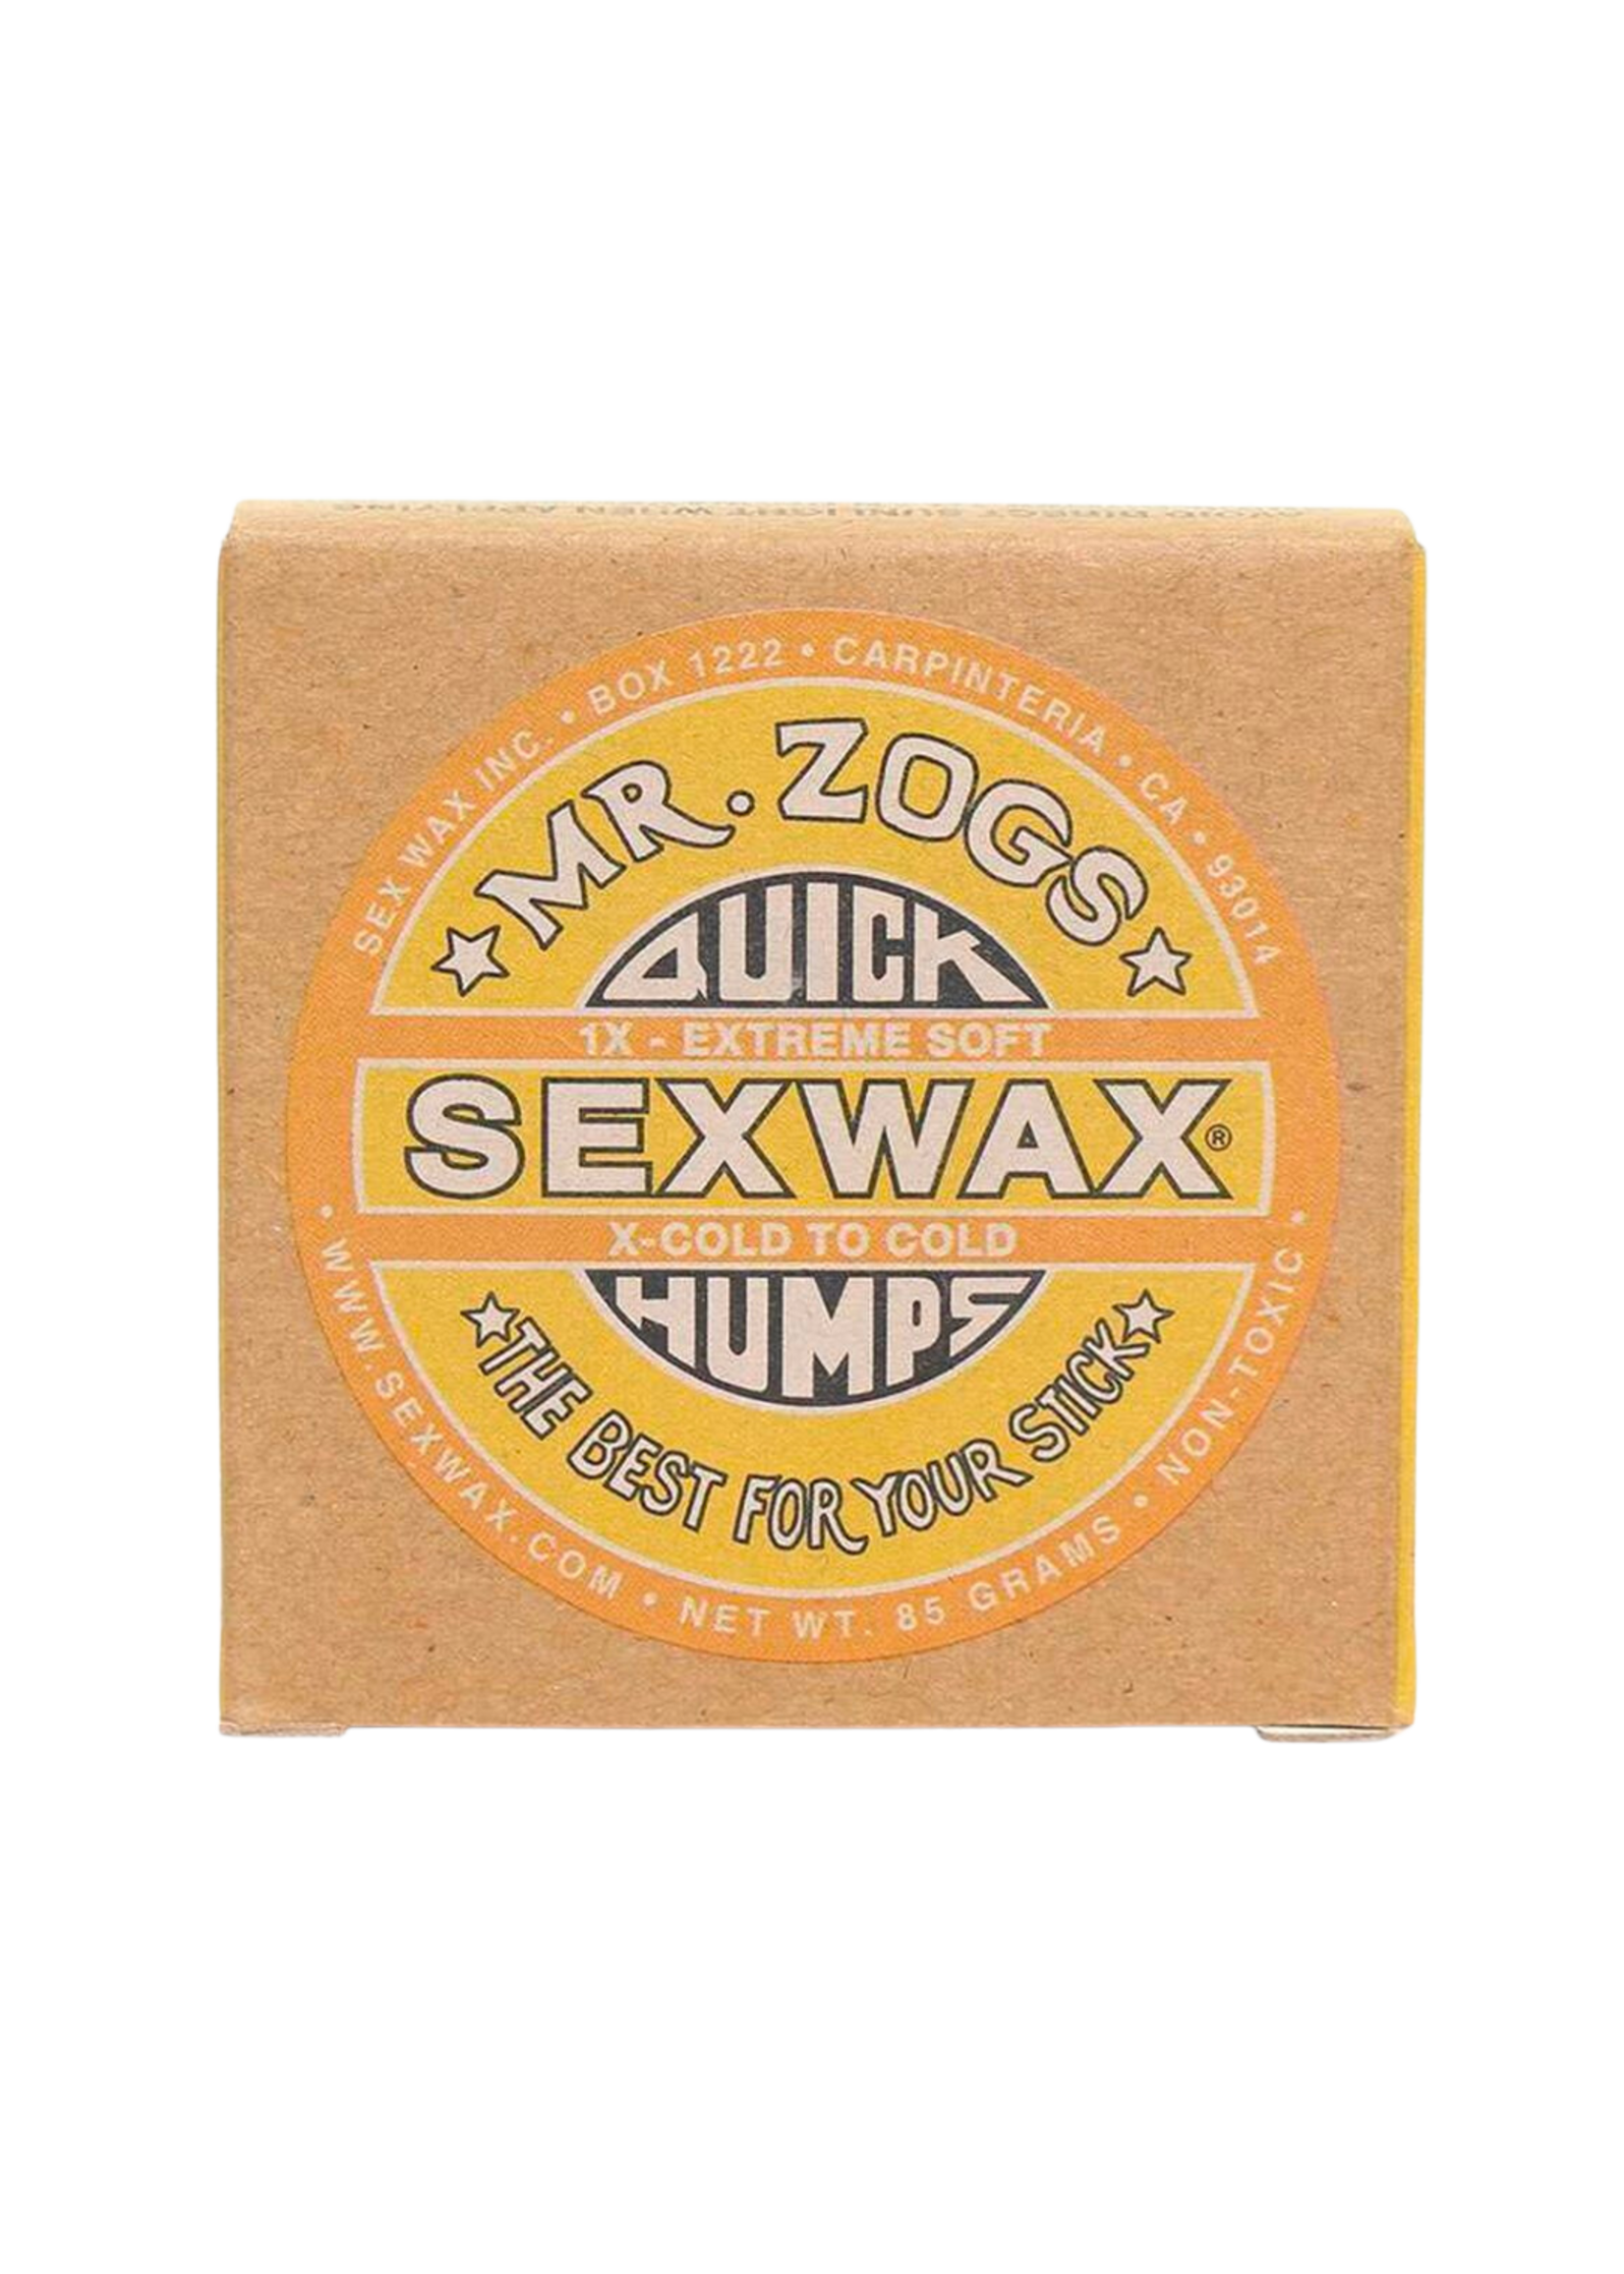 SEX WAX QUICK HUMPS EXTRA COLD WAX